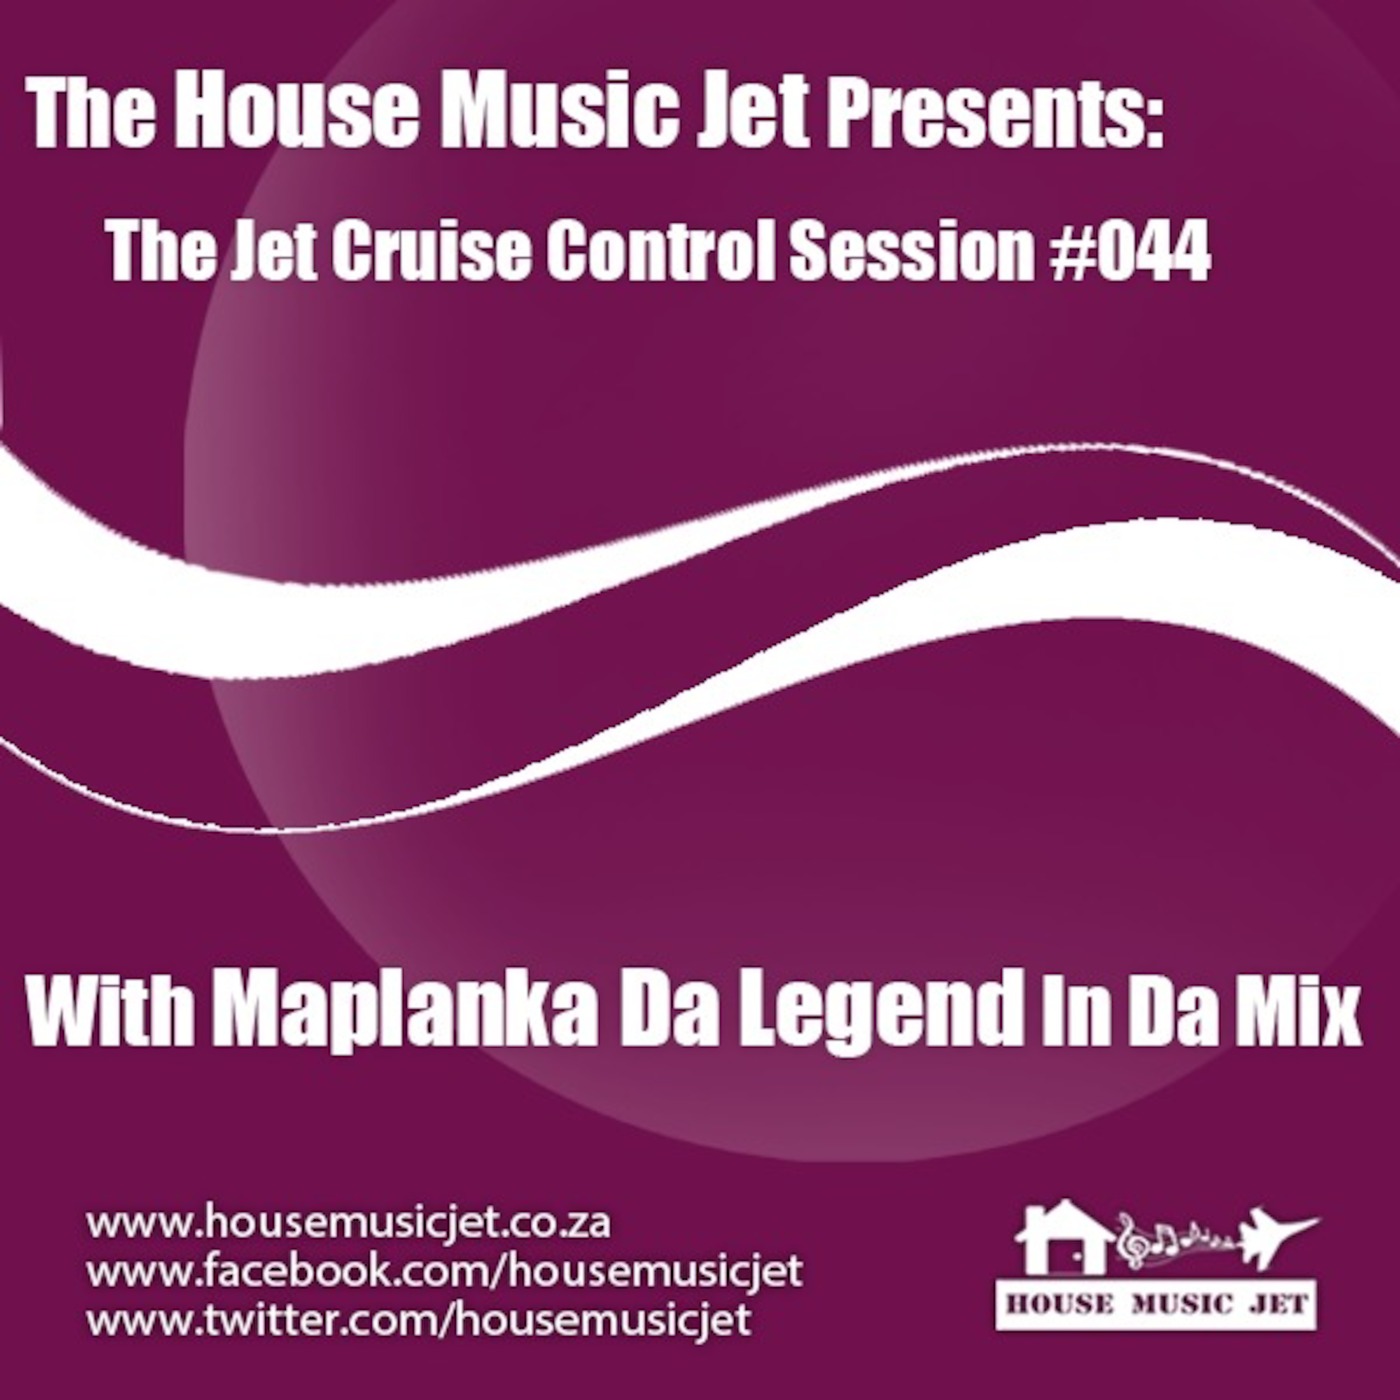 Maplanka Da Legend In Da Mix - Jet Cruise Control Session 44